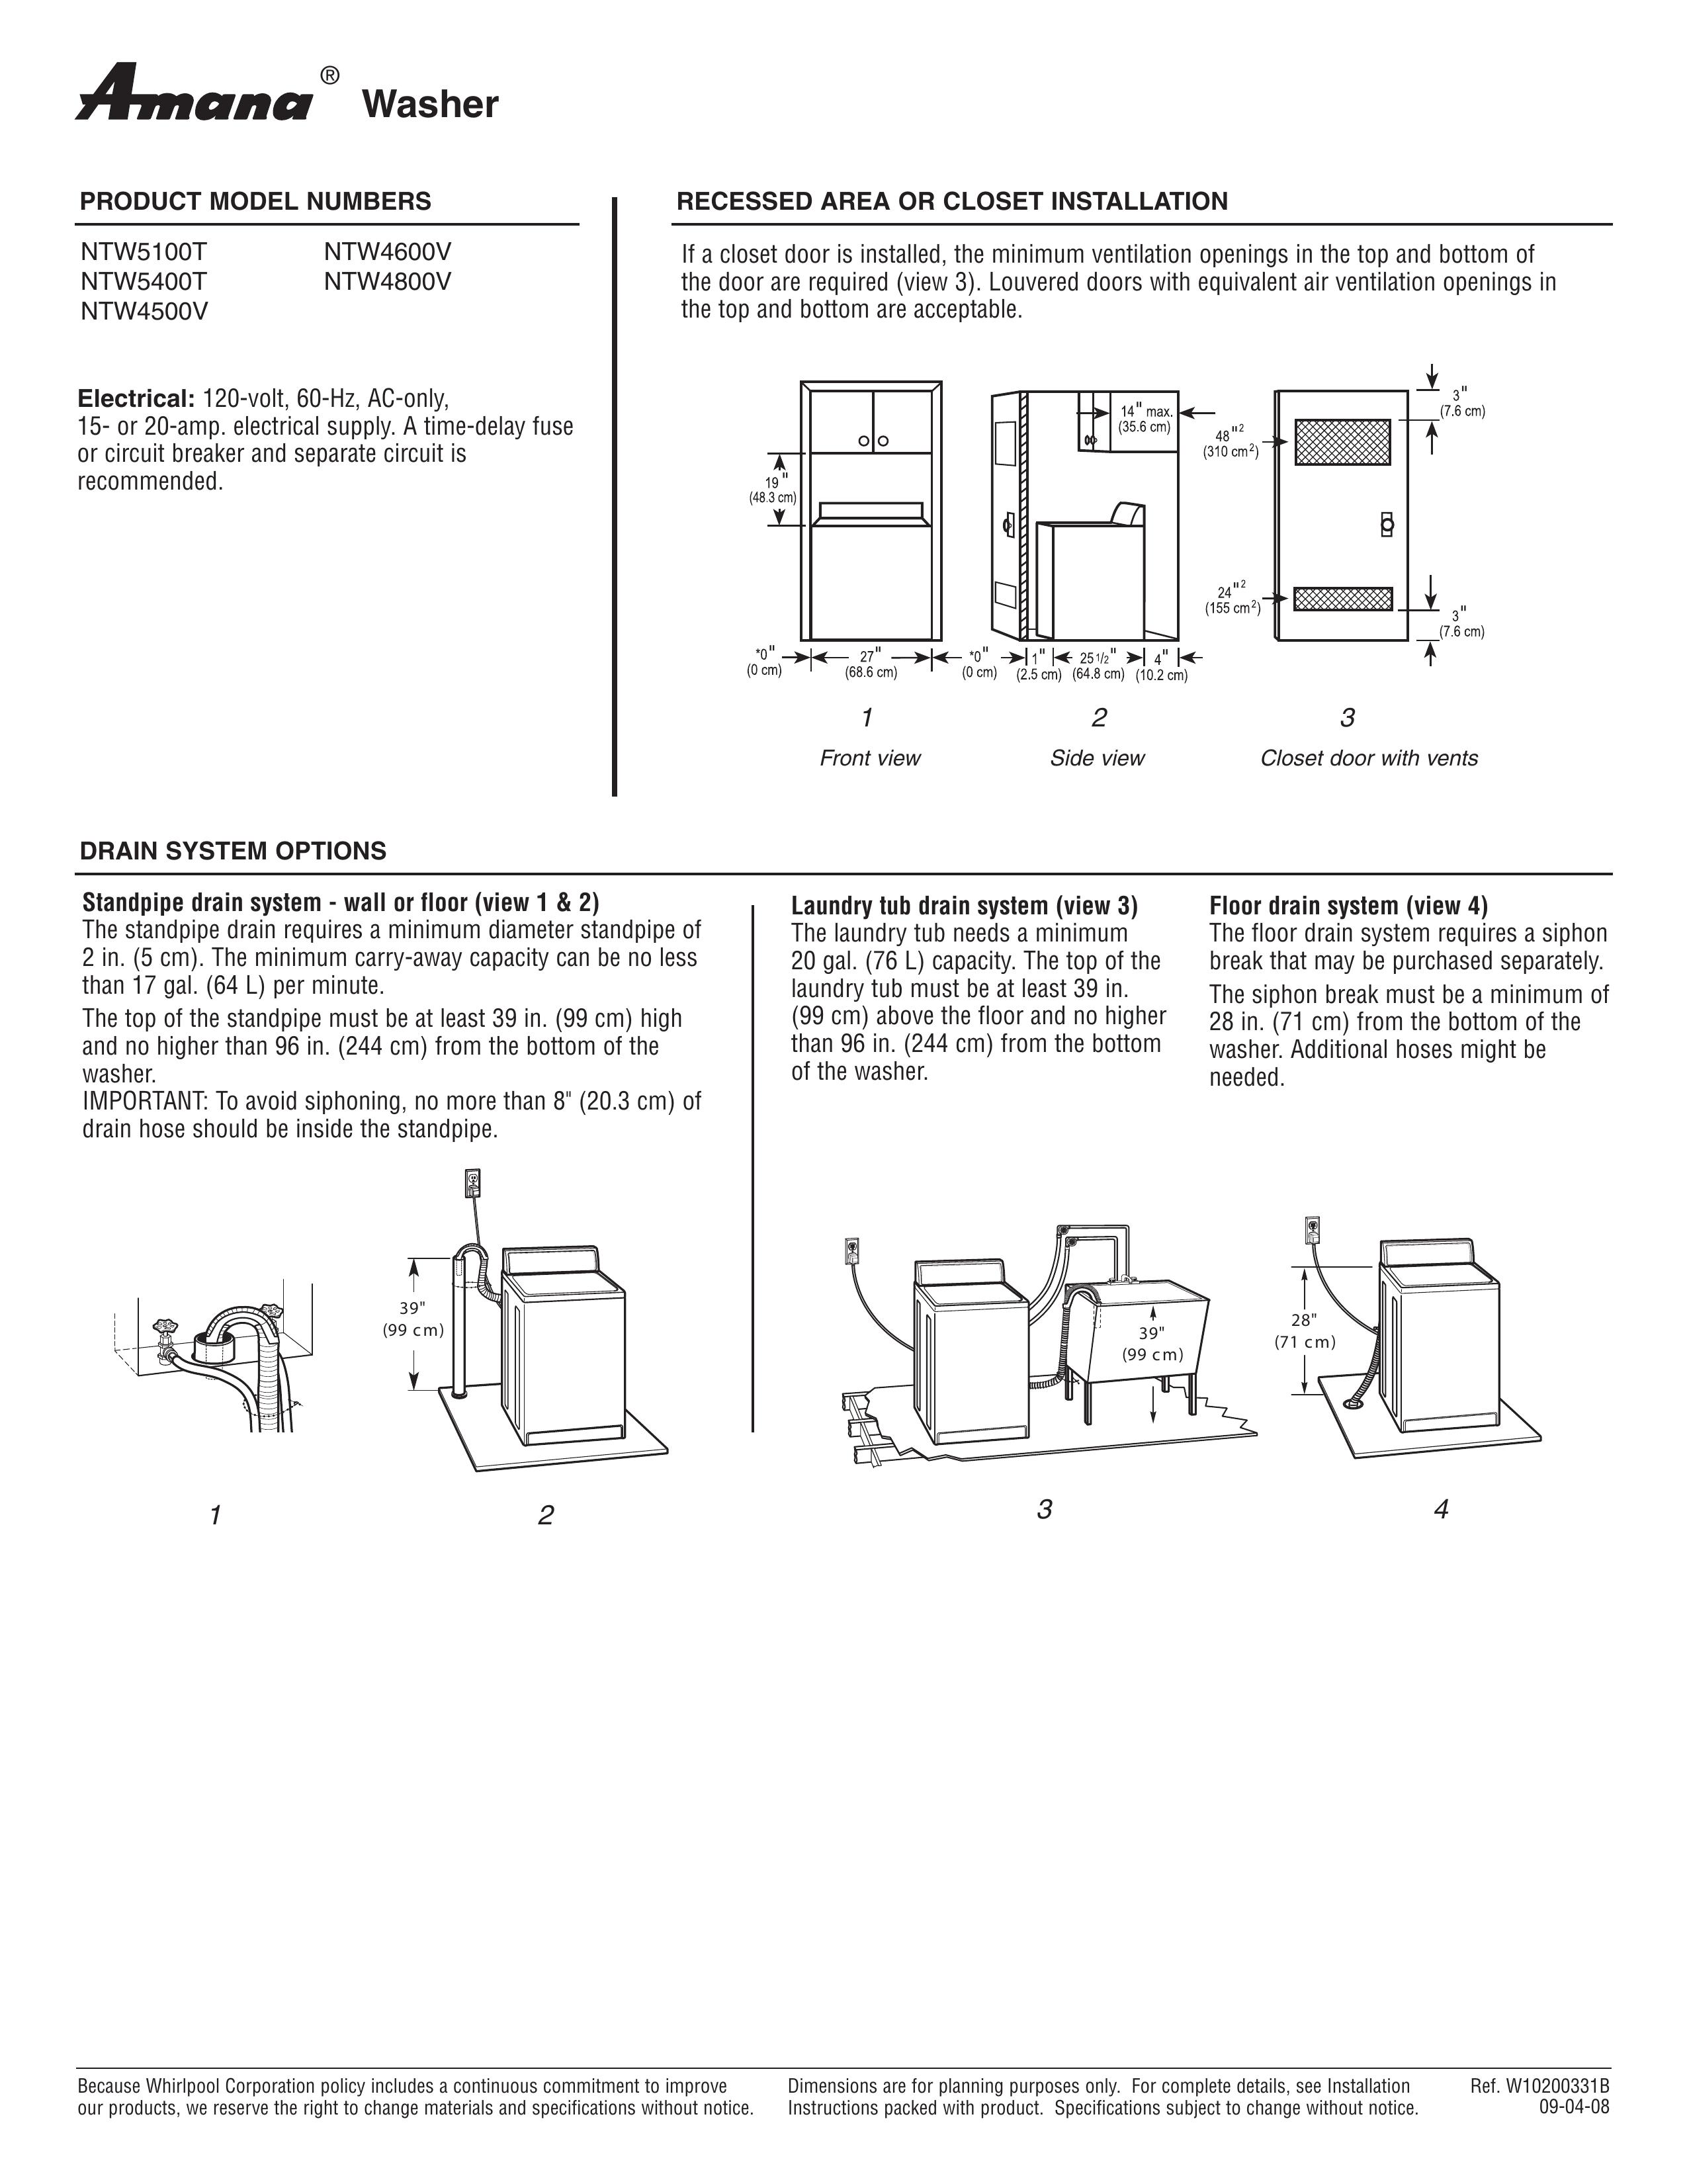 Amana NTW4800V Washer User Manual